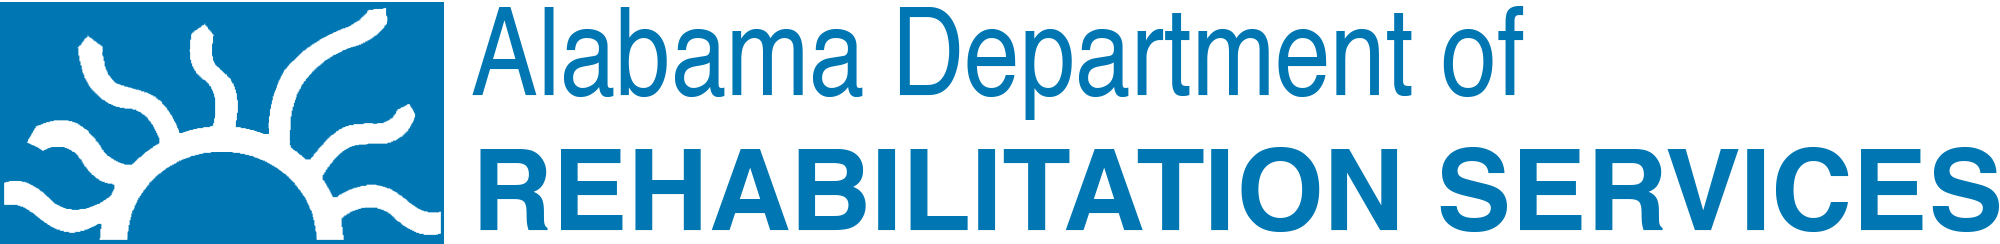 Alabama Department of Rehabilitation Services Logo logo